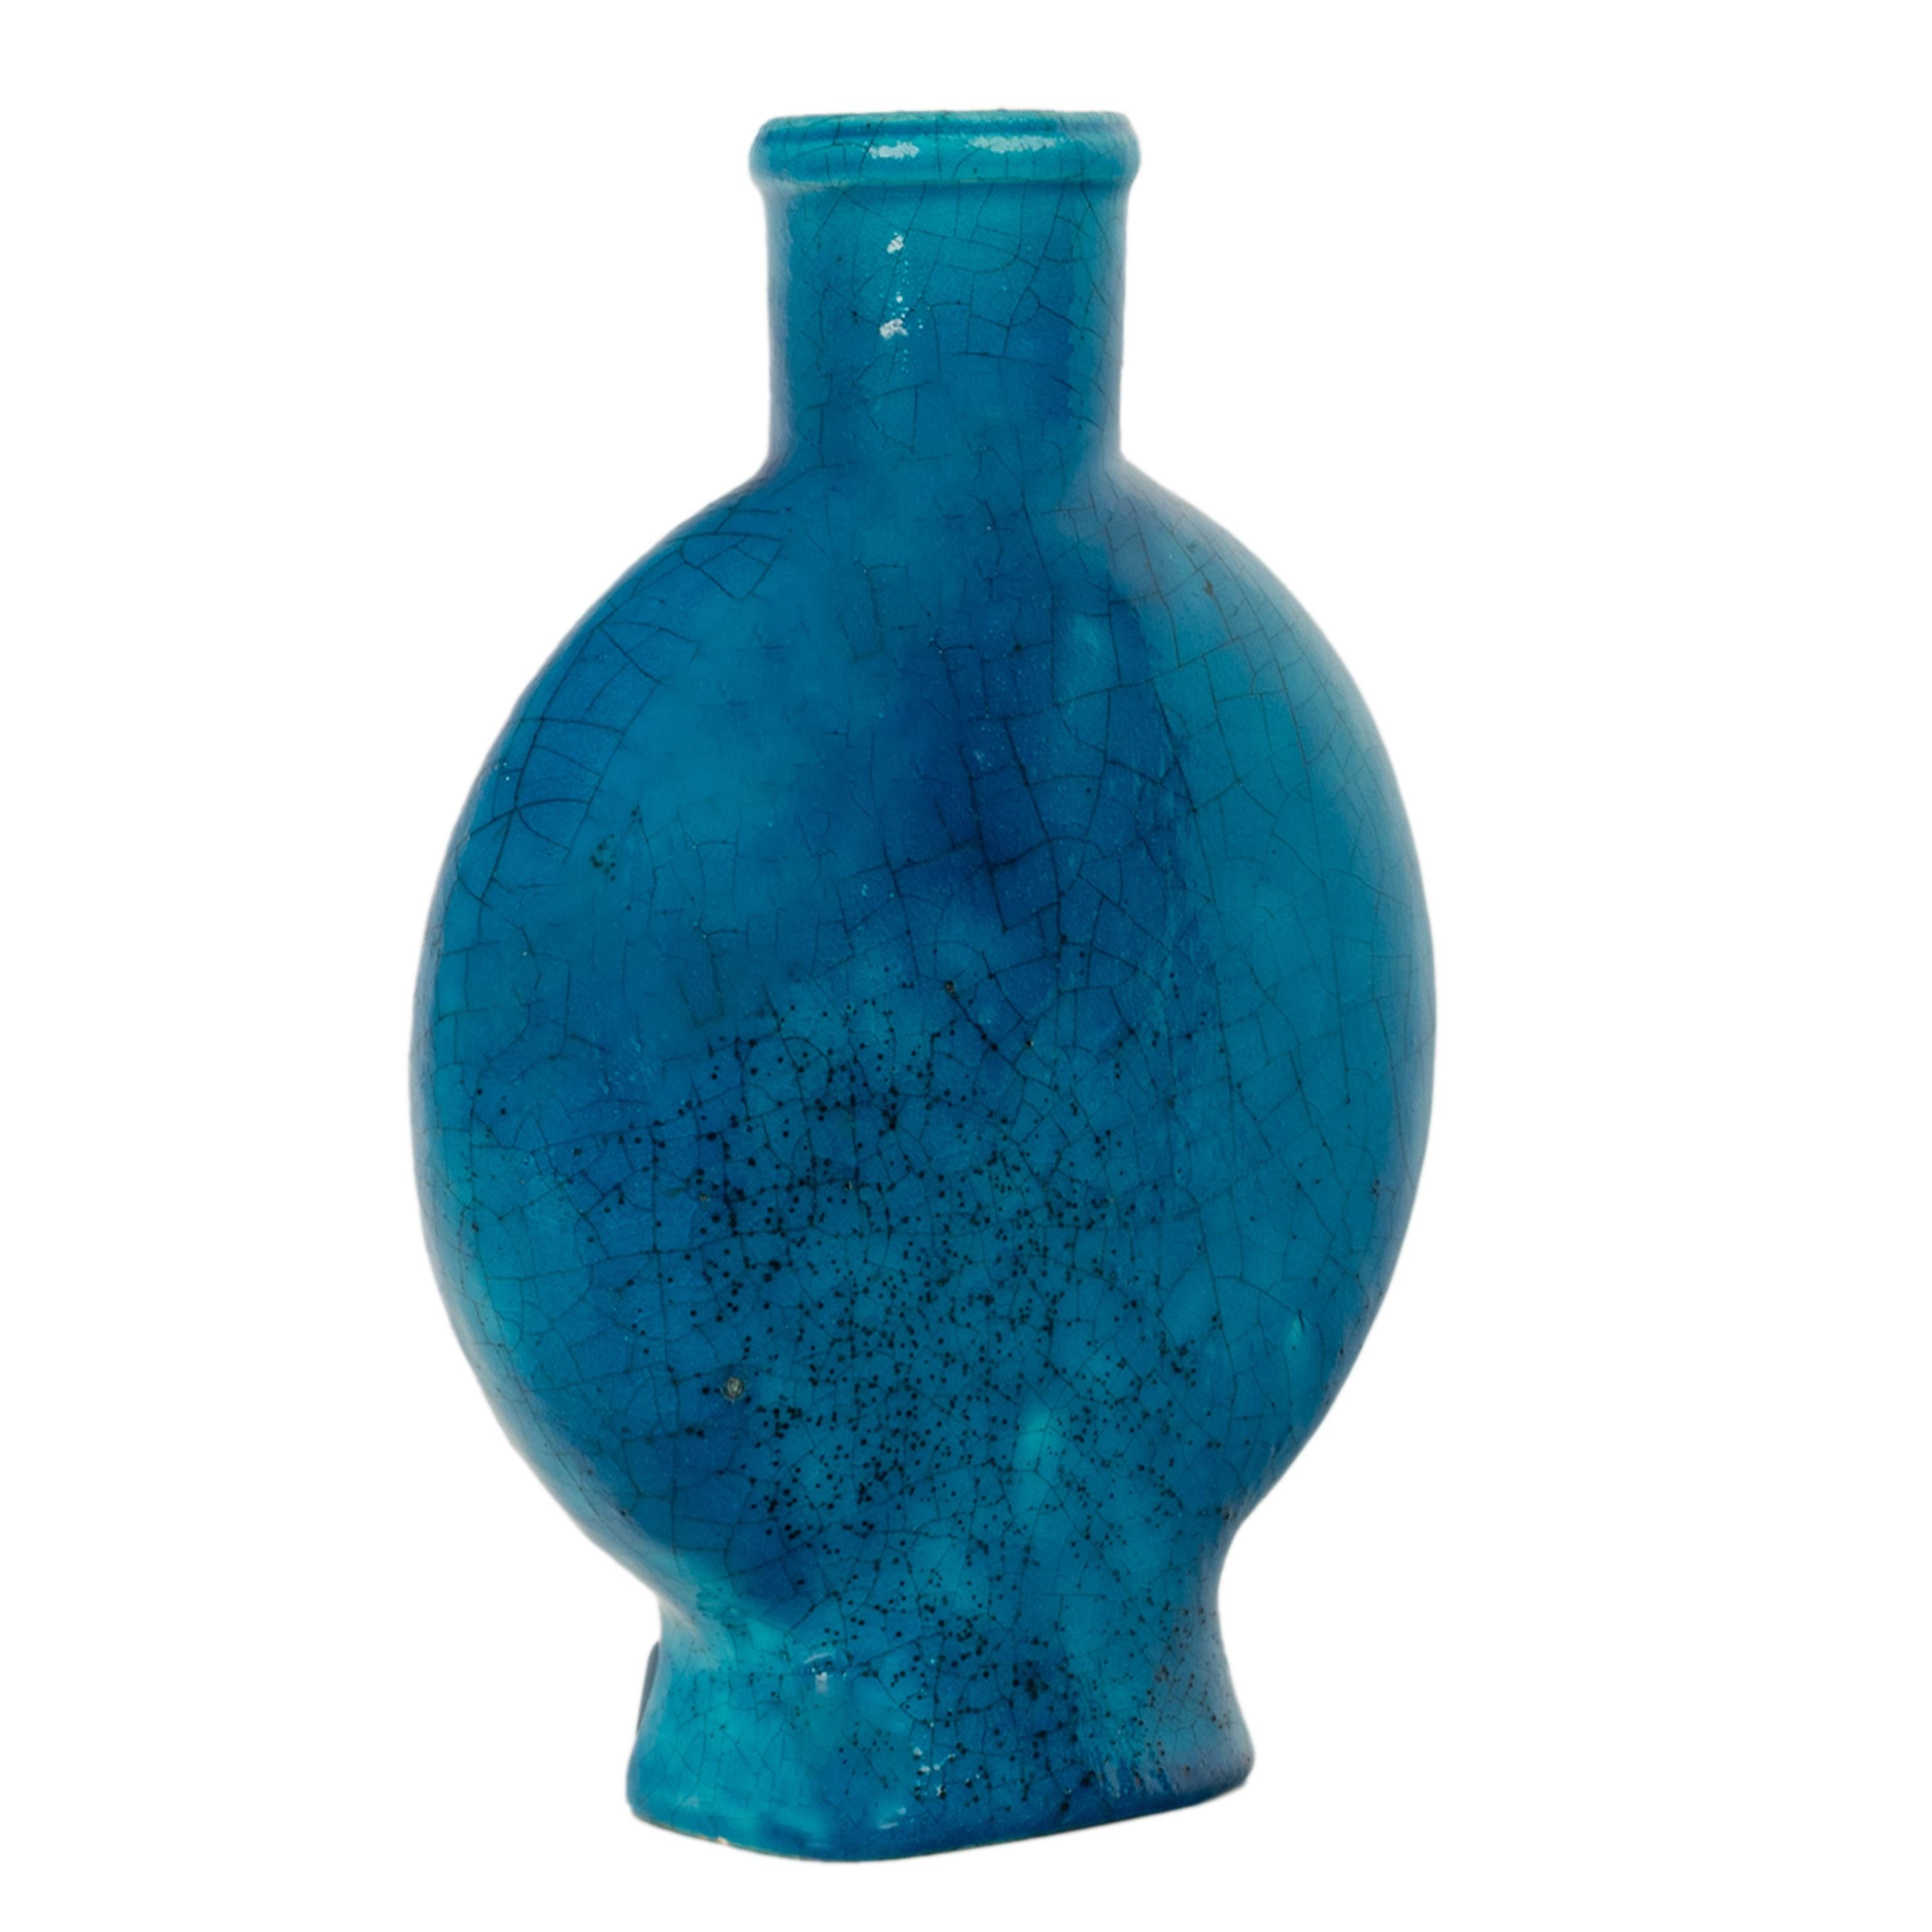 Glazed Antique French Art Deco Turquoise Blue Pottery Vase Edmond Lachenal Signed 1930 For Sale